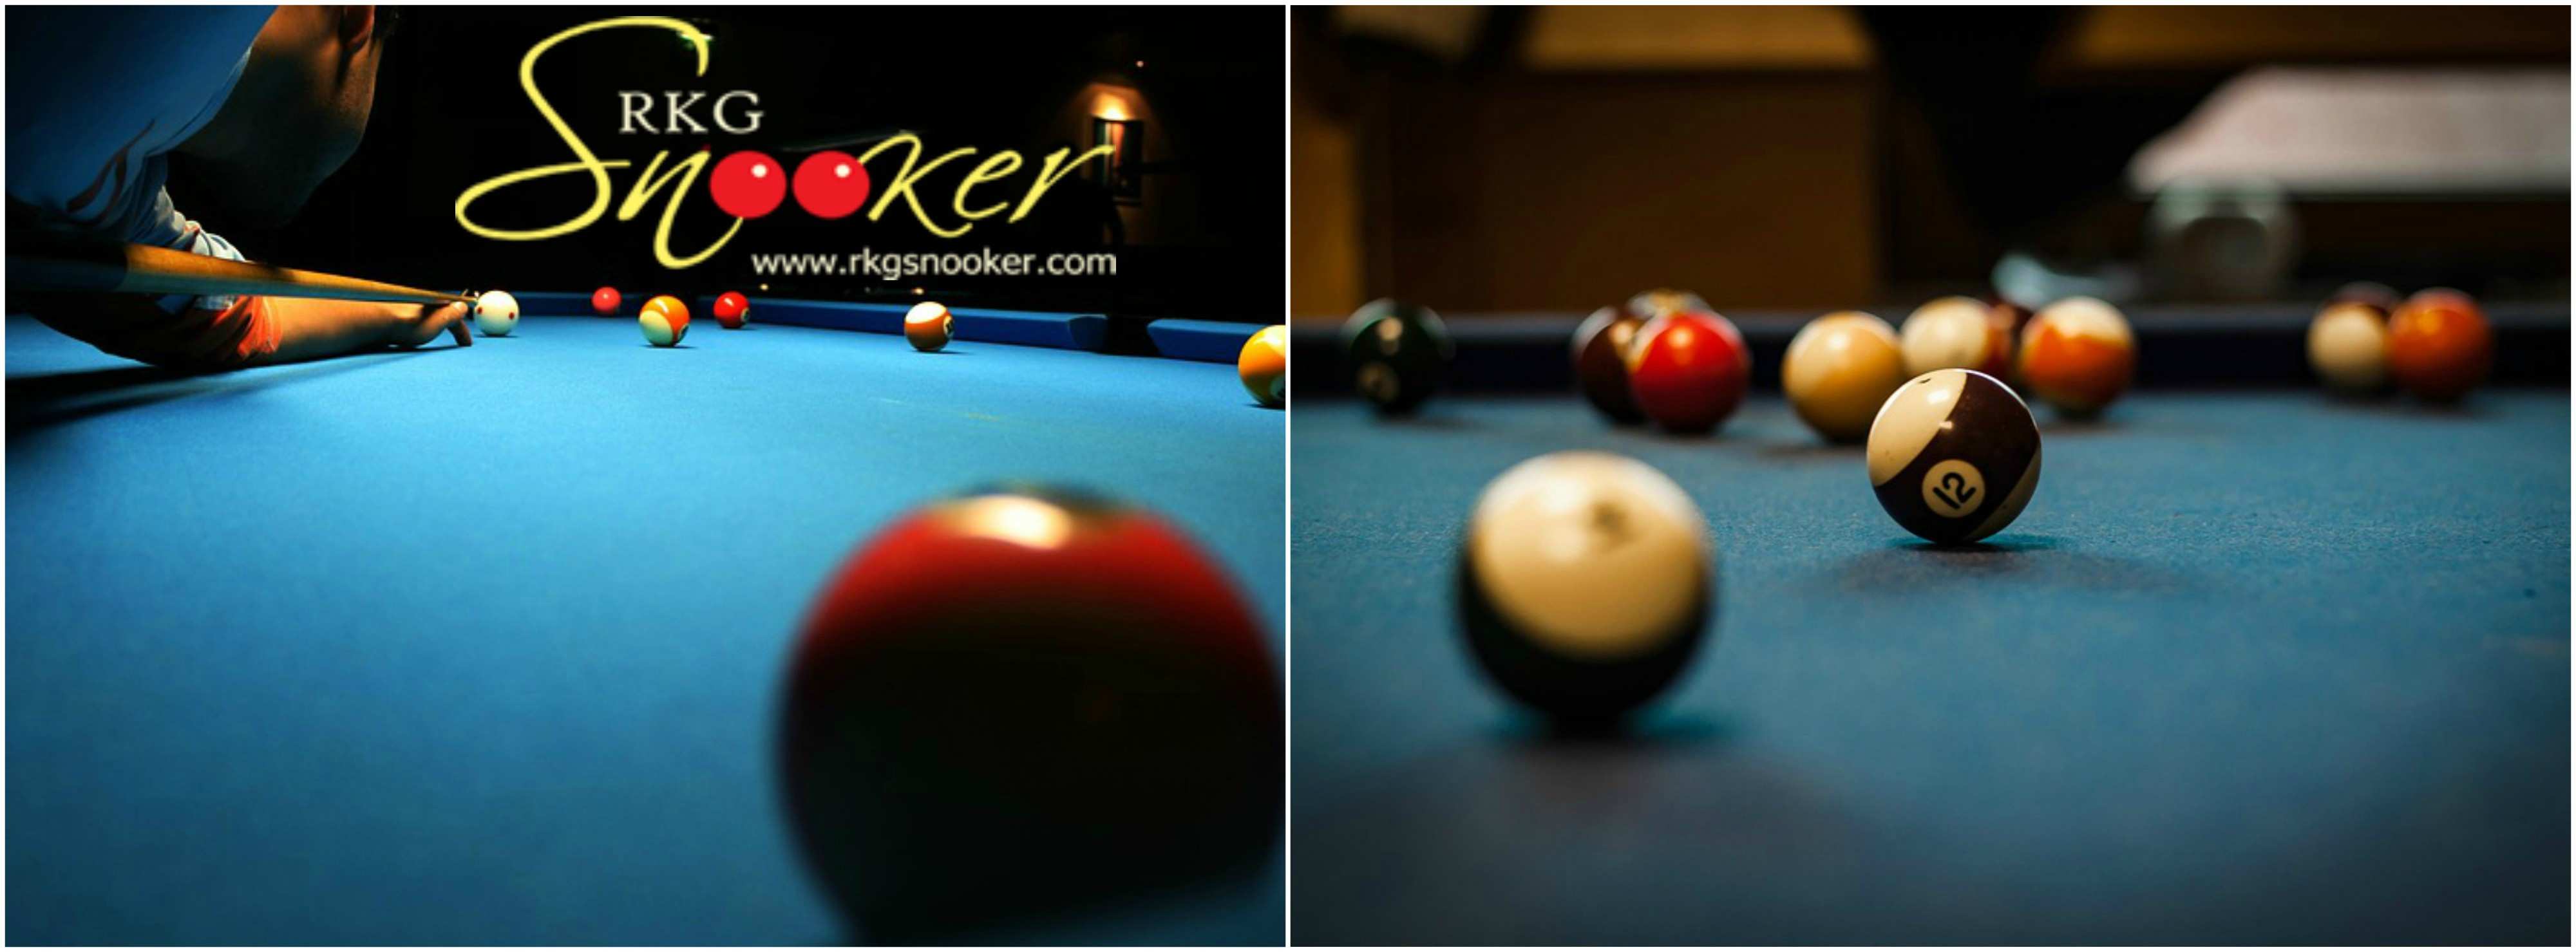 RKG Snooker: A Platform for Cue Sports